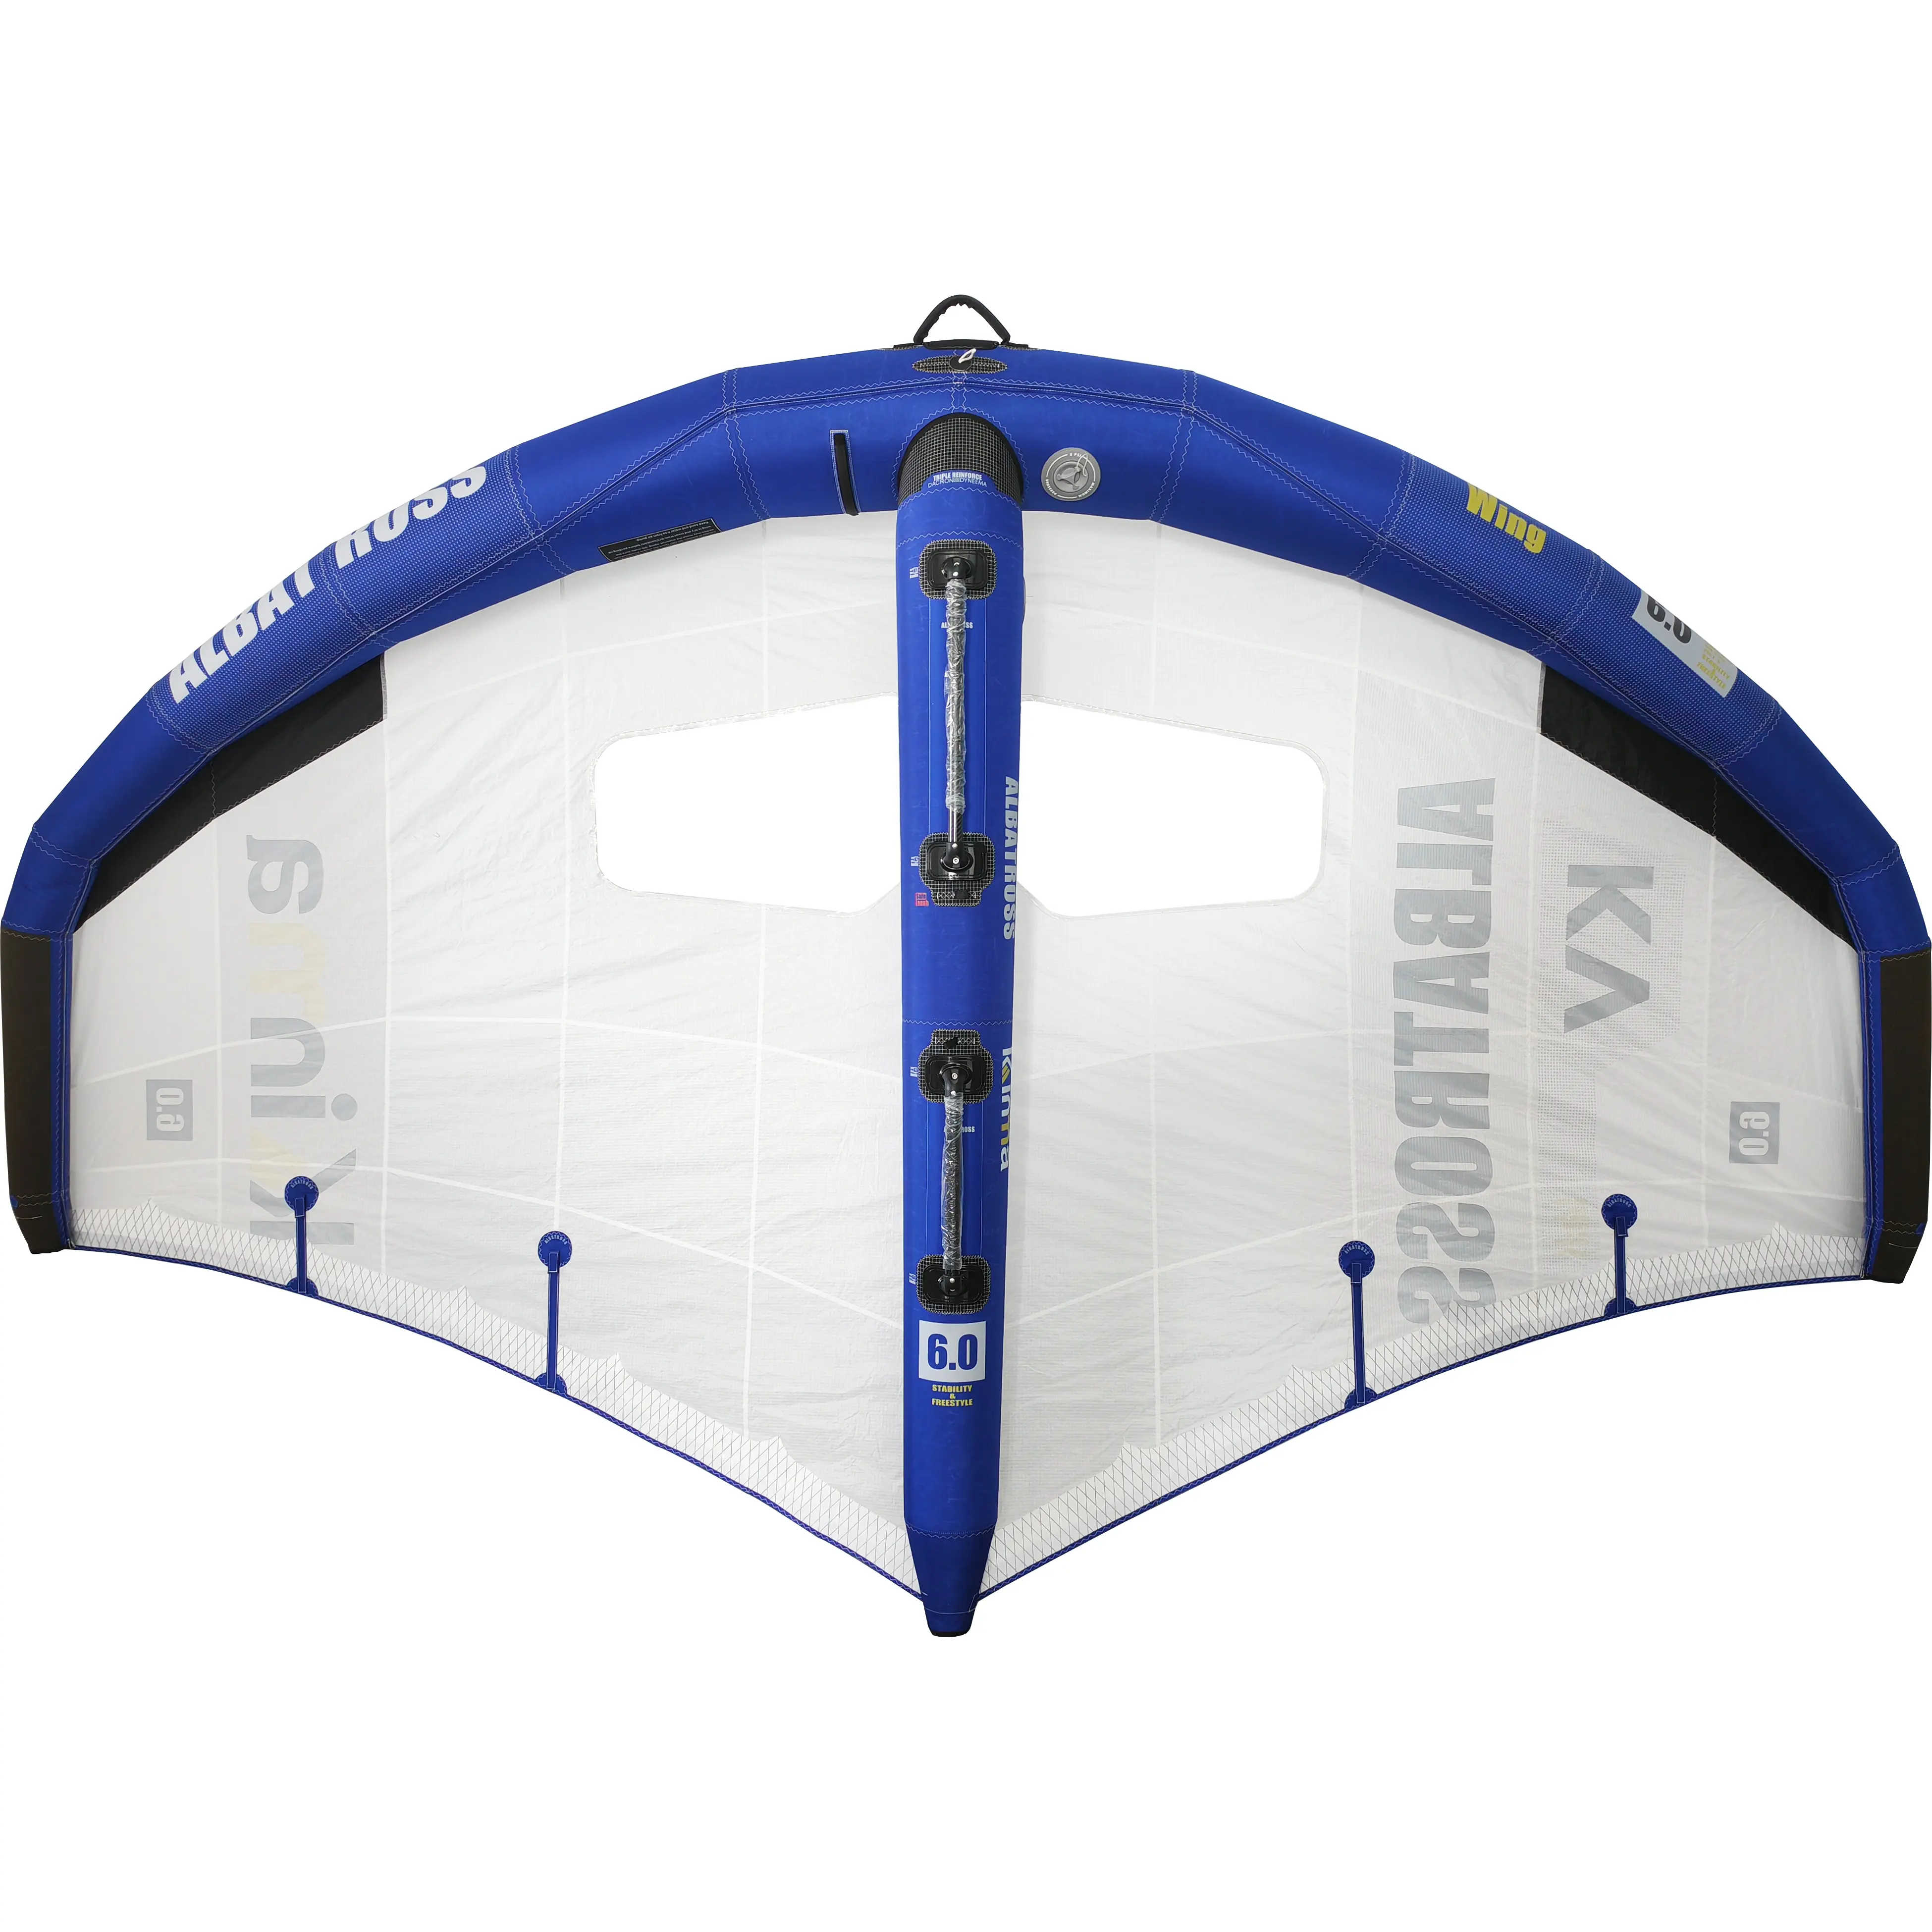 Kinma nuevo producto cómodo fácil de frustrar Windsurf Foiling Wingsurf Wing Foil Flying inflable Surf Wing